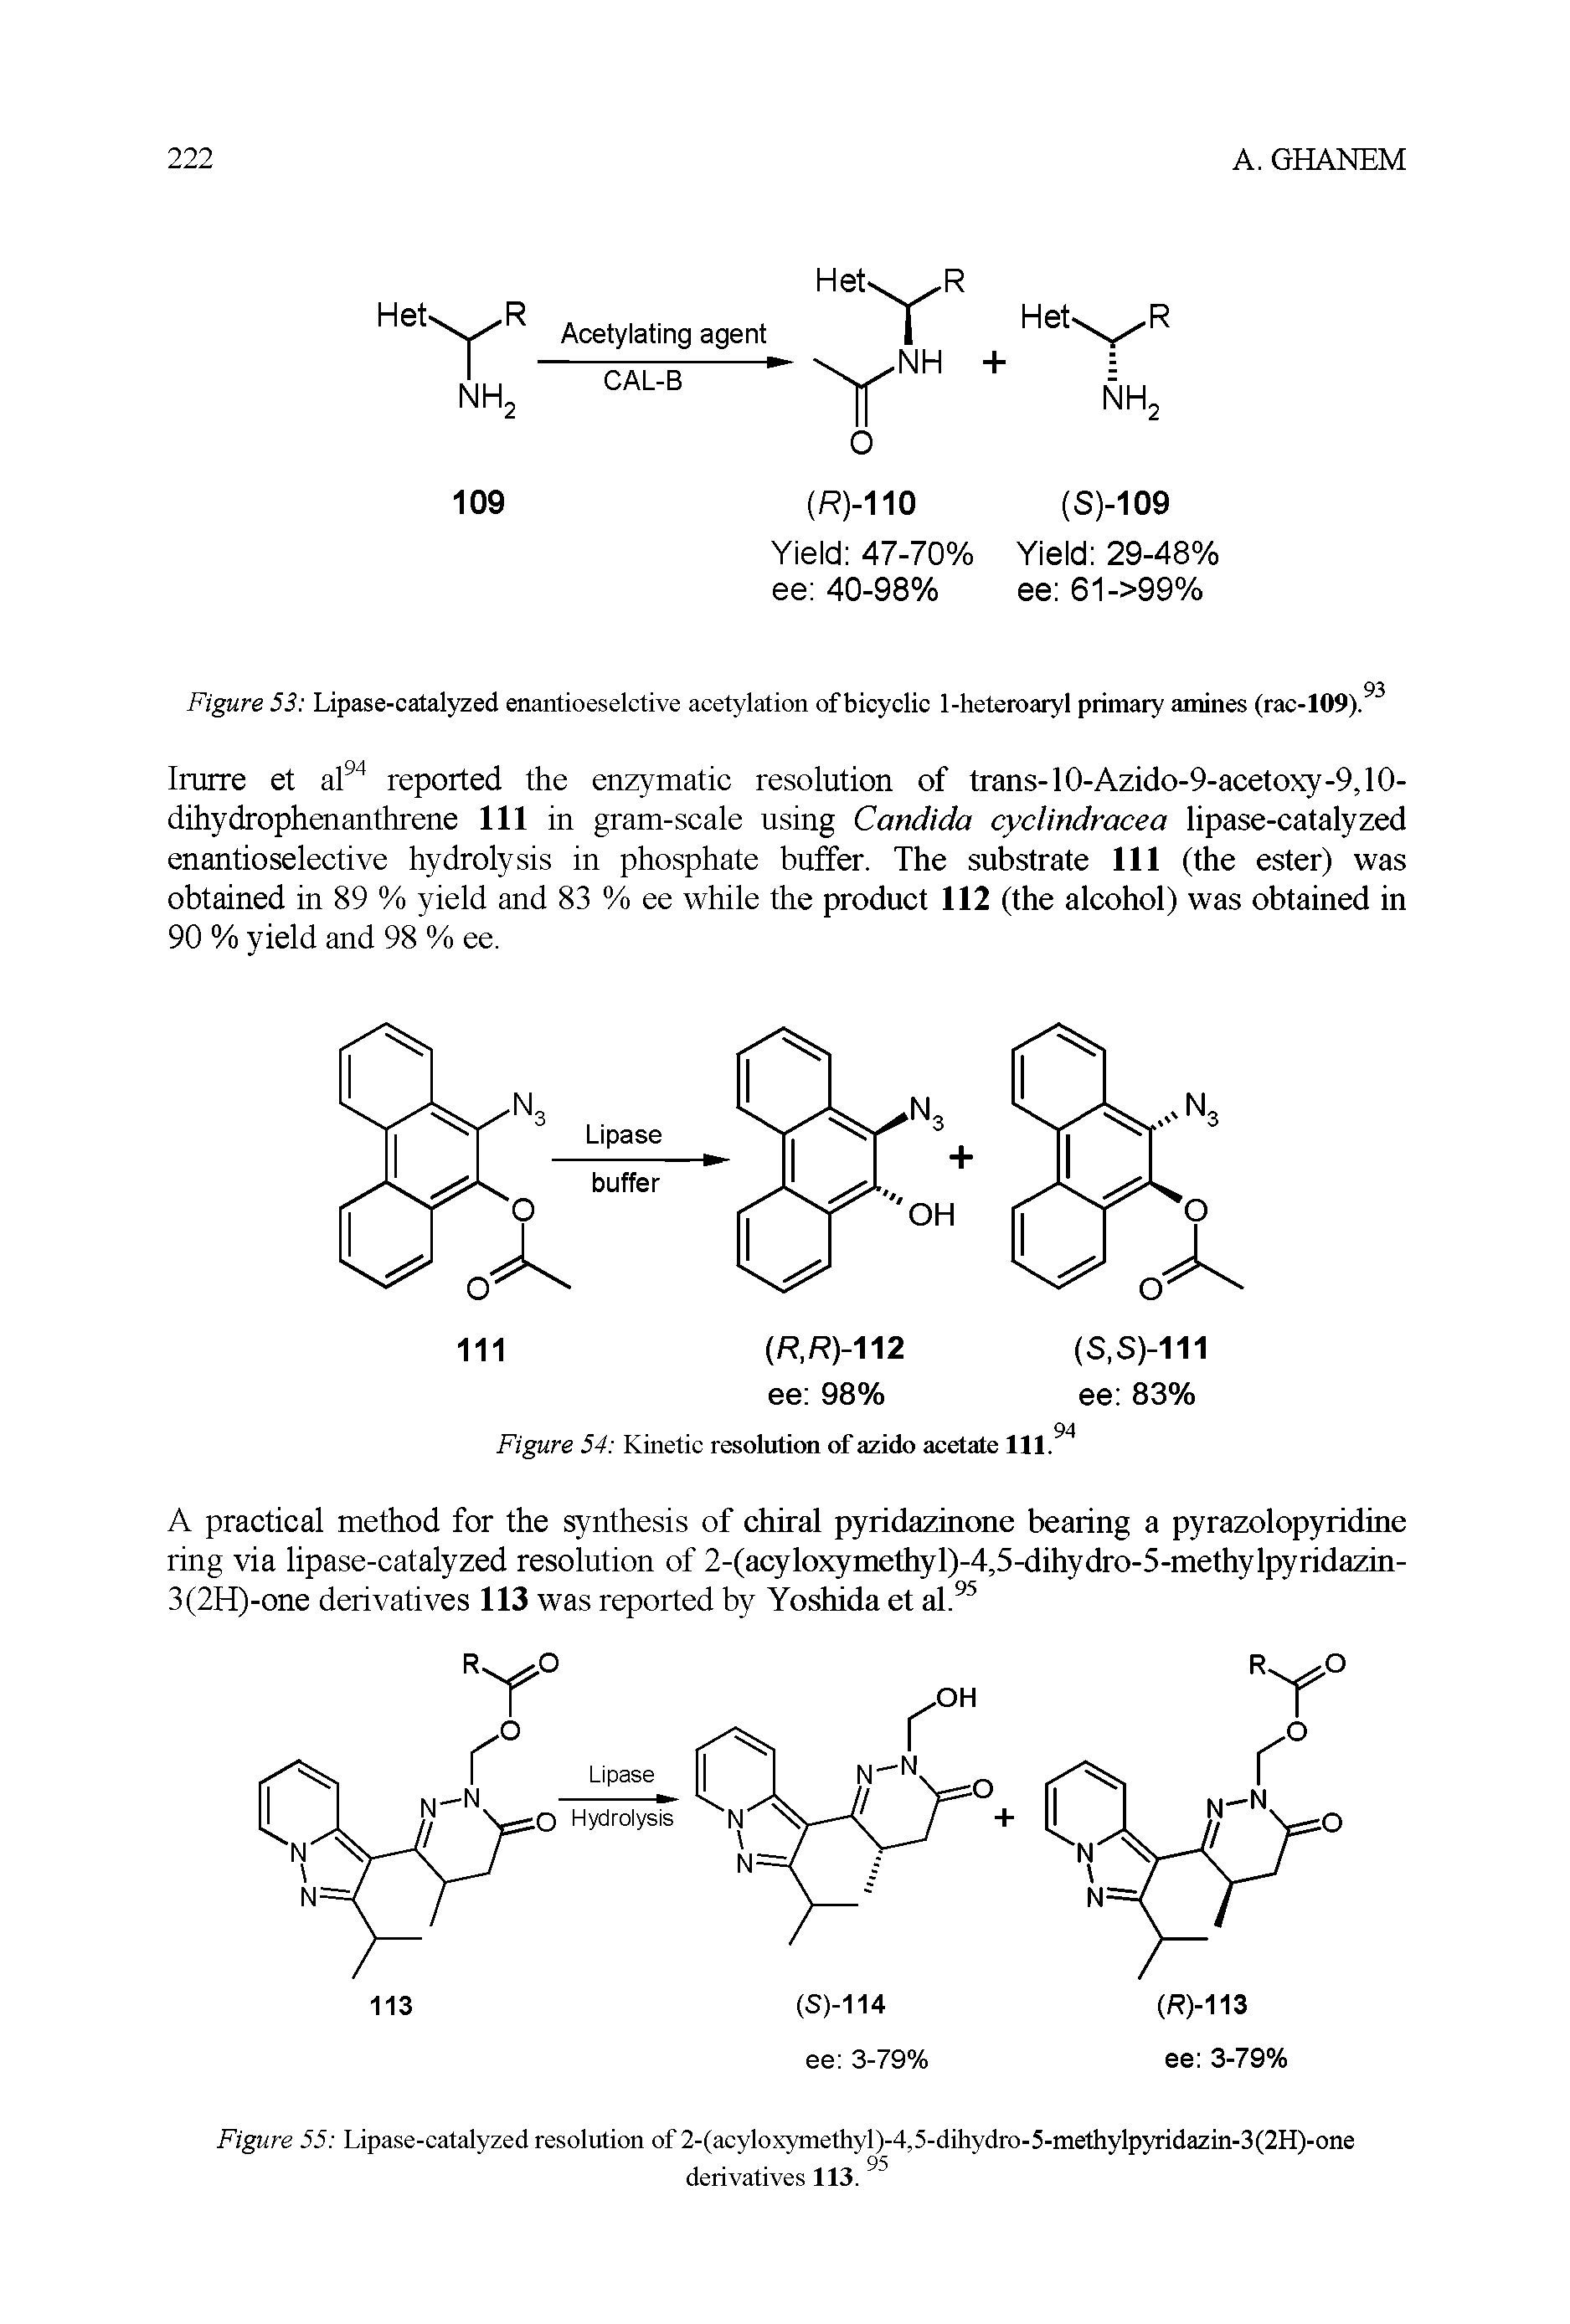 Figure 55 Lipase-catalyzed resolution of 2-(acyloxymethyl)-4,5-dihydro-5-methylpyridazin-3(2H)-one...